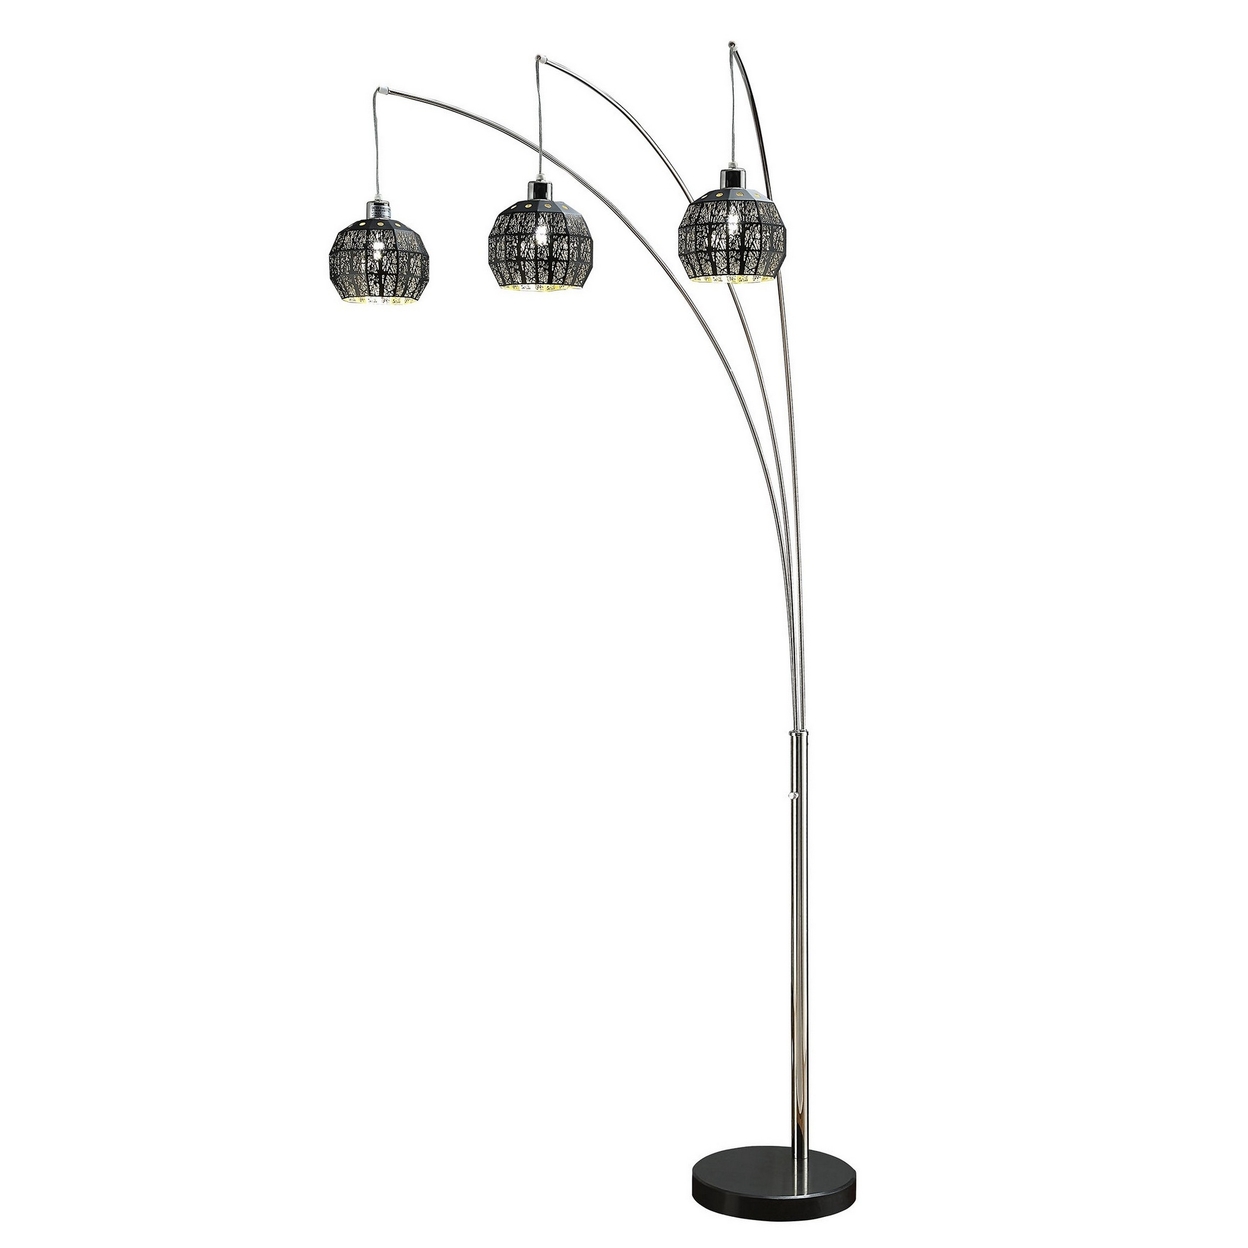 92 Inch 3 Arm Arc Floor Lamp With Modern Round Metal Base, Silver Finish -Saltoro Sherpi